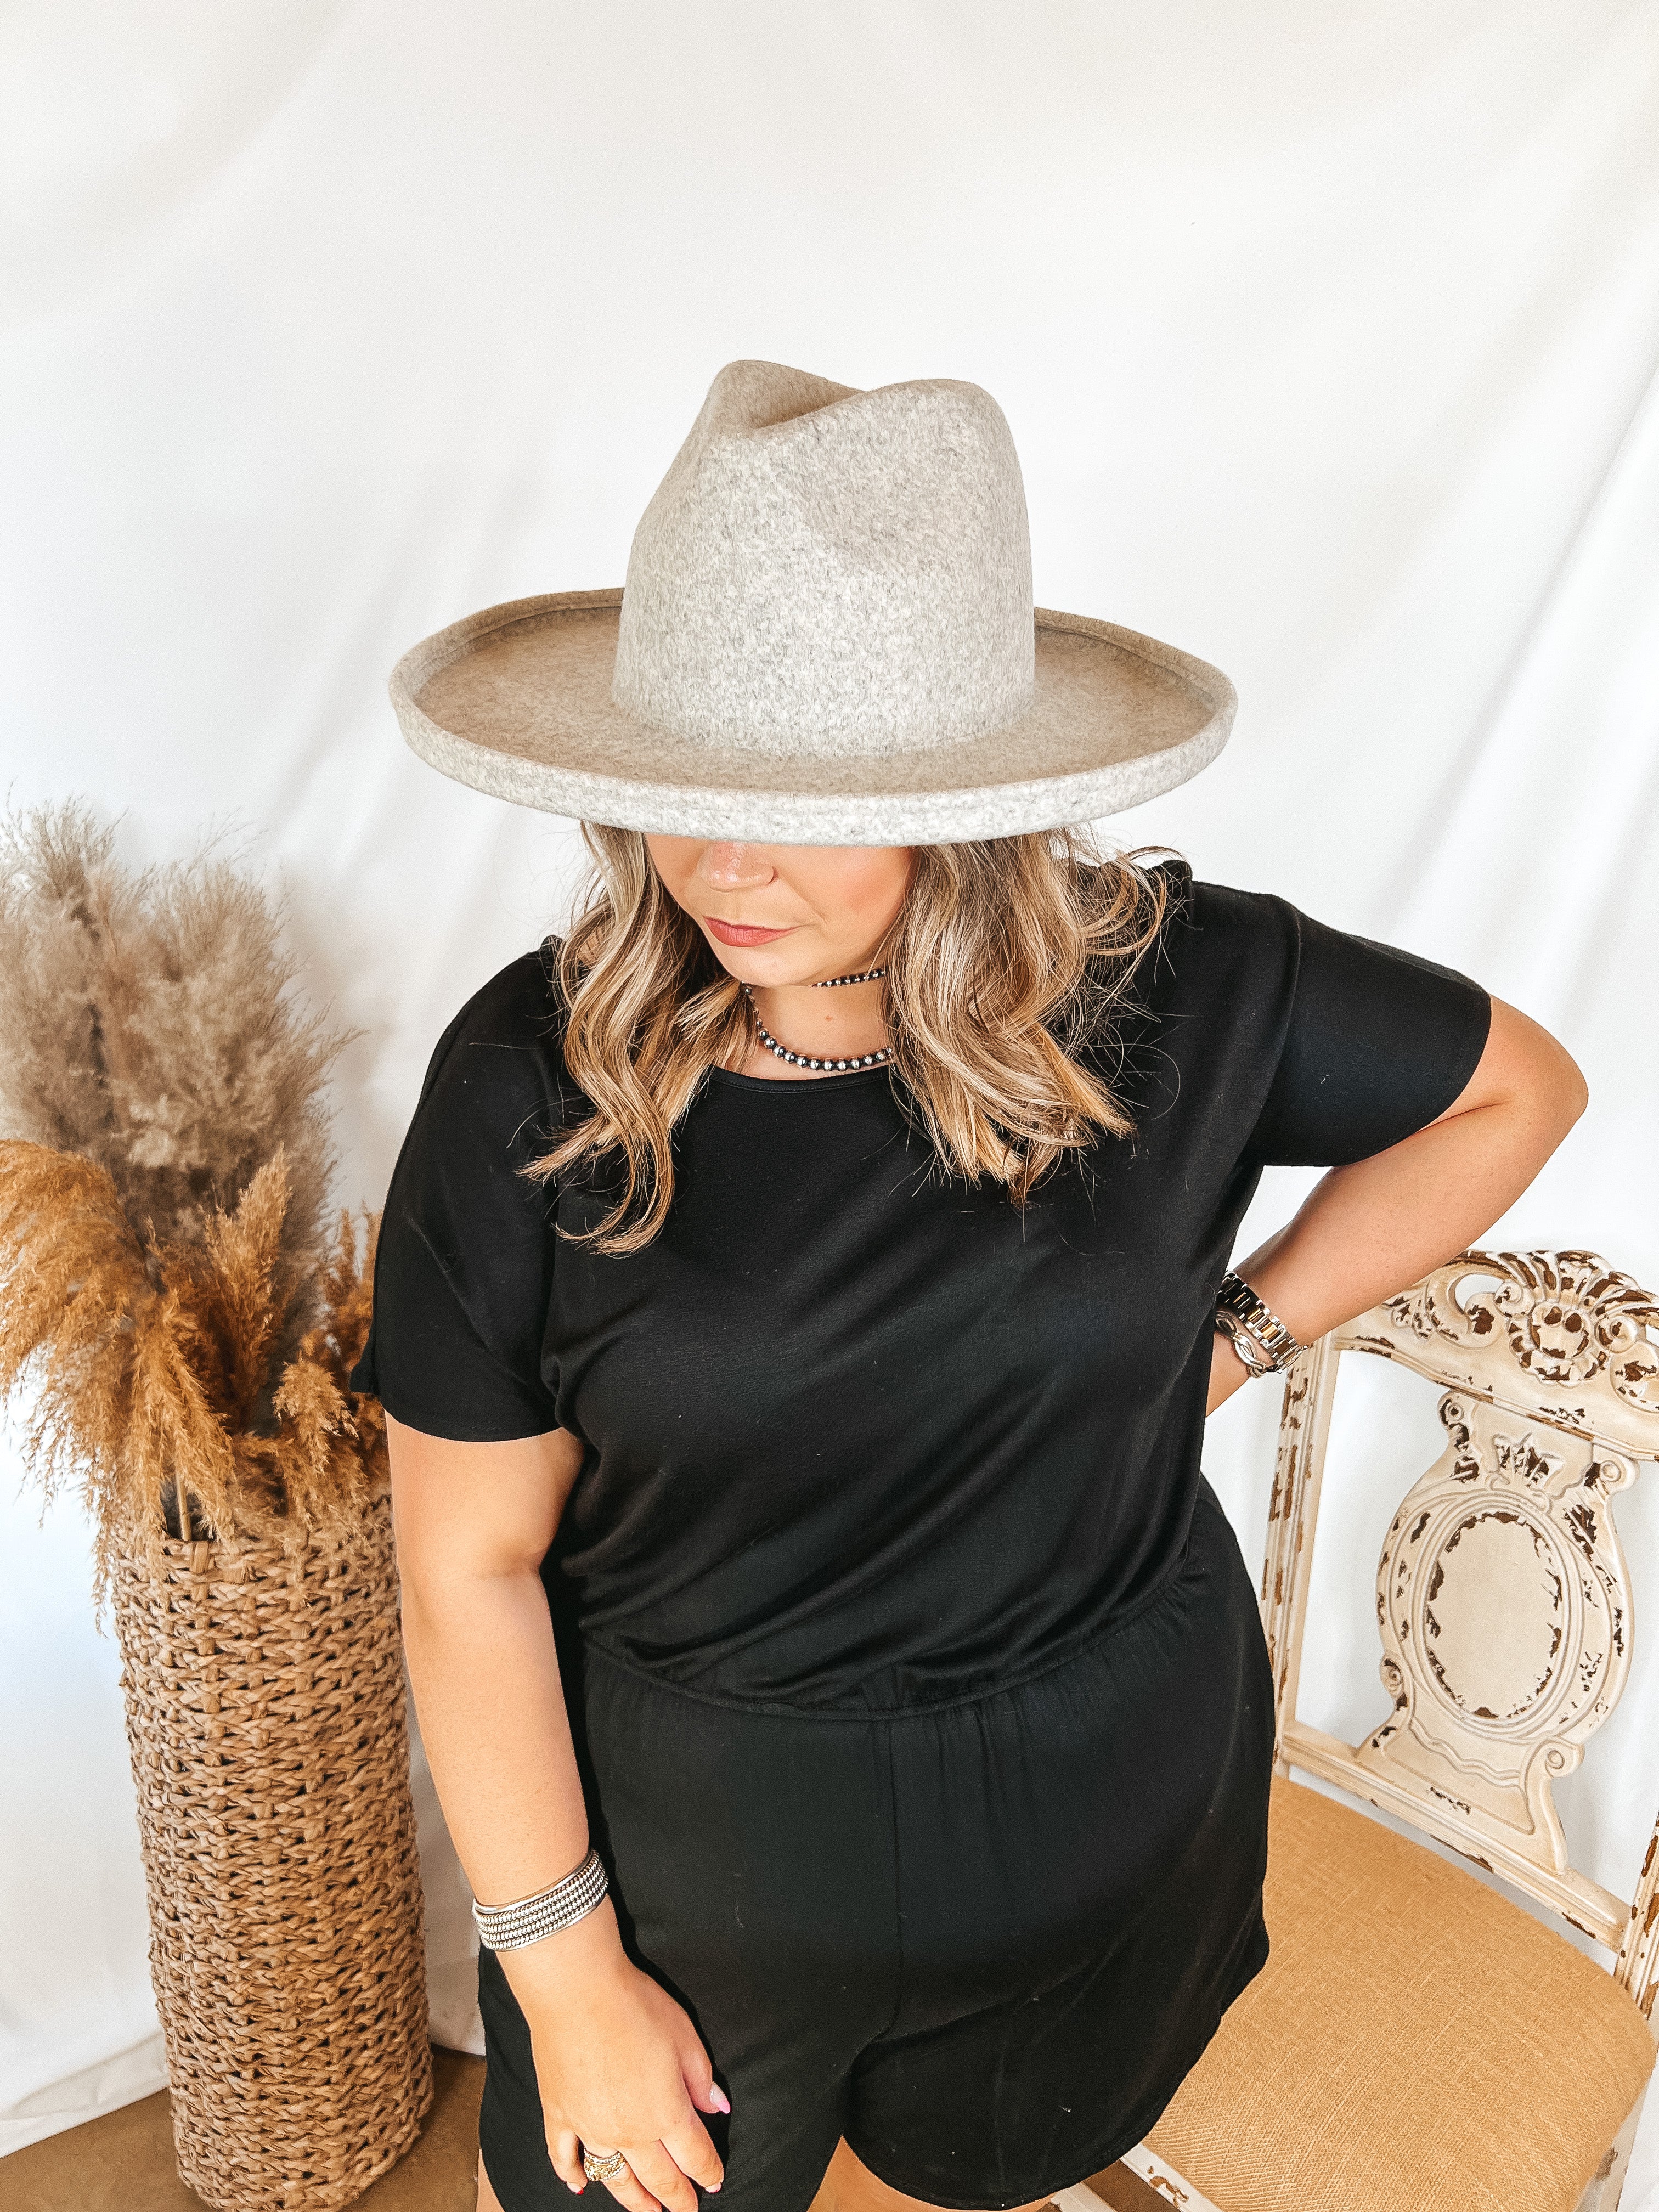 GiGi Pip | Cara Loren Pencil Brim Wool Felt Hat in Heather Grey - Giddy Up Glamour Boutique